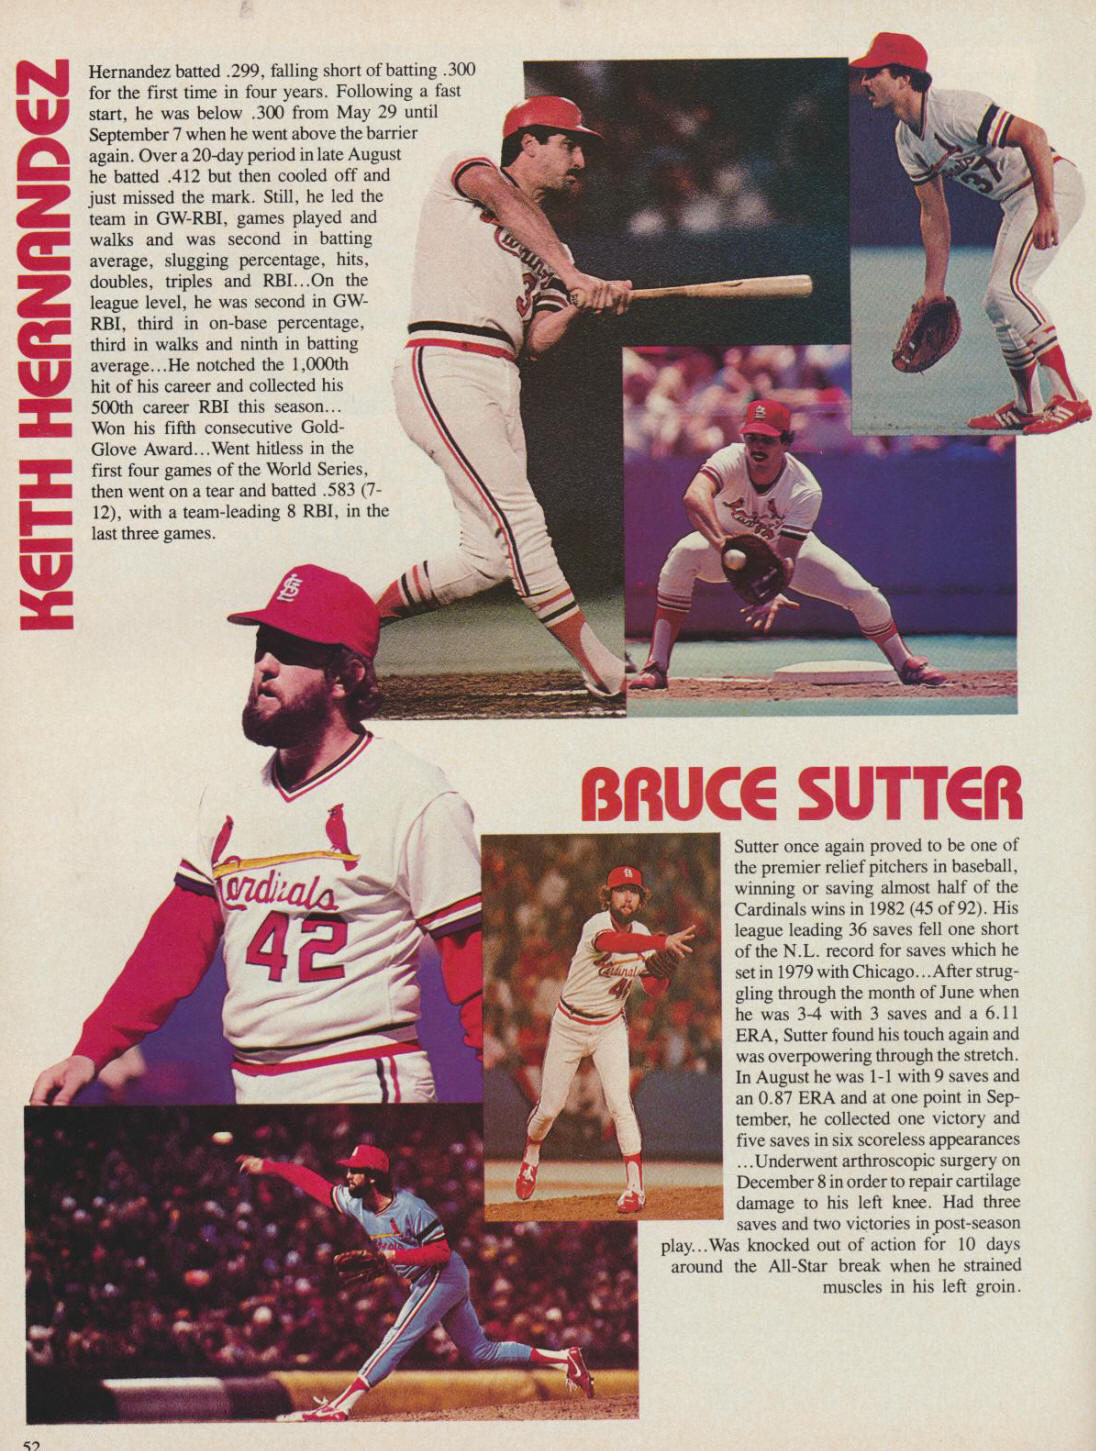 1983 St. Louis Cardinals Official Scorebook - pg 52